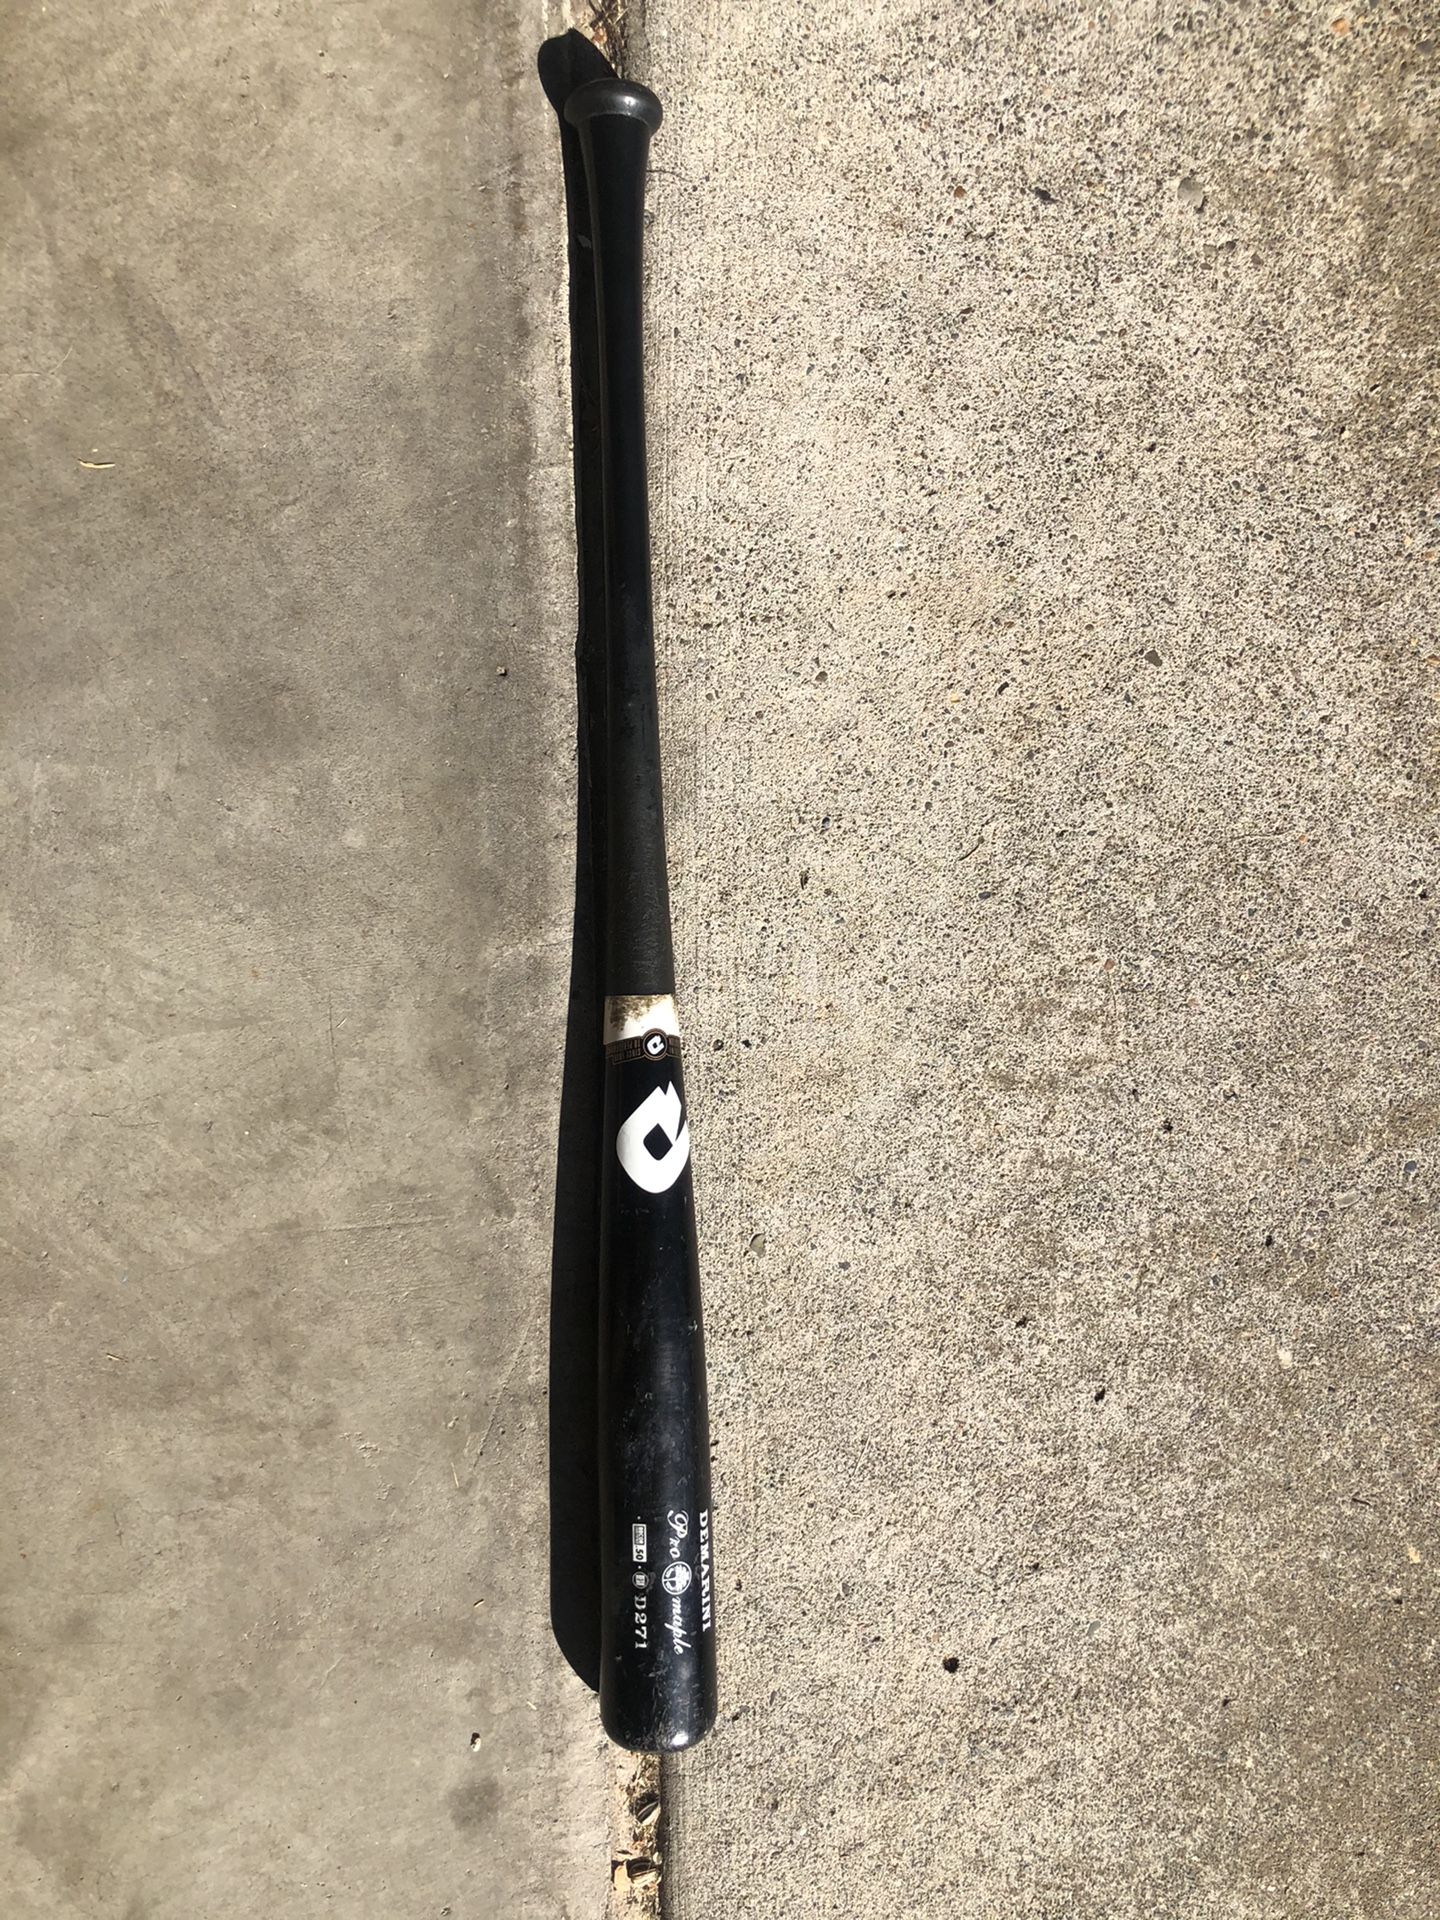 Demarini wood/composite baseball bat